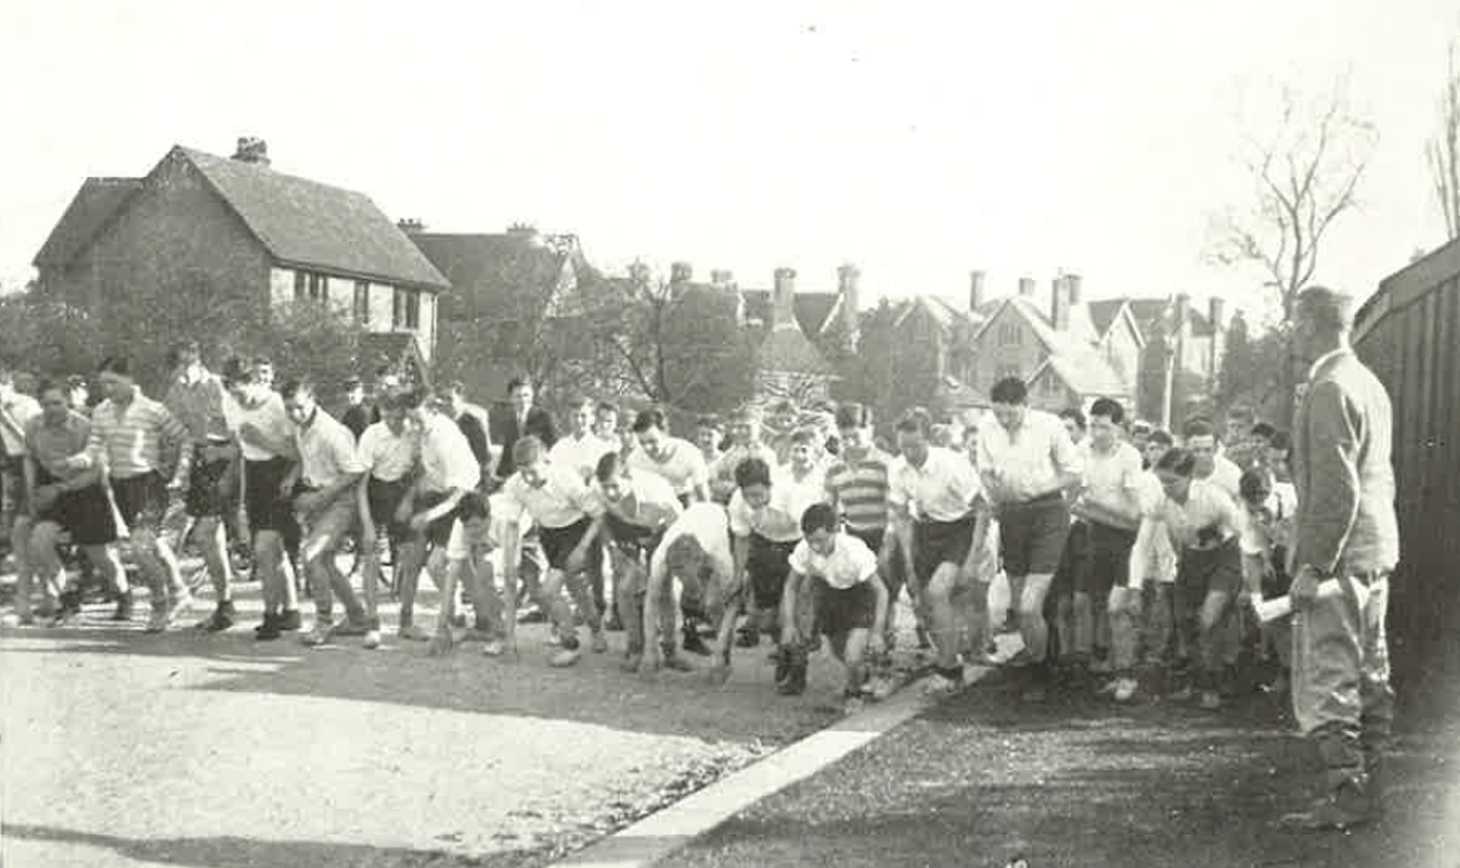 Steeplechase starting line 1933